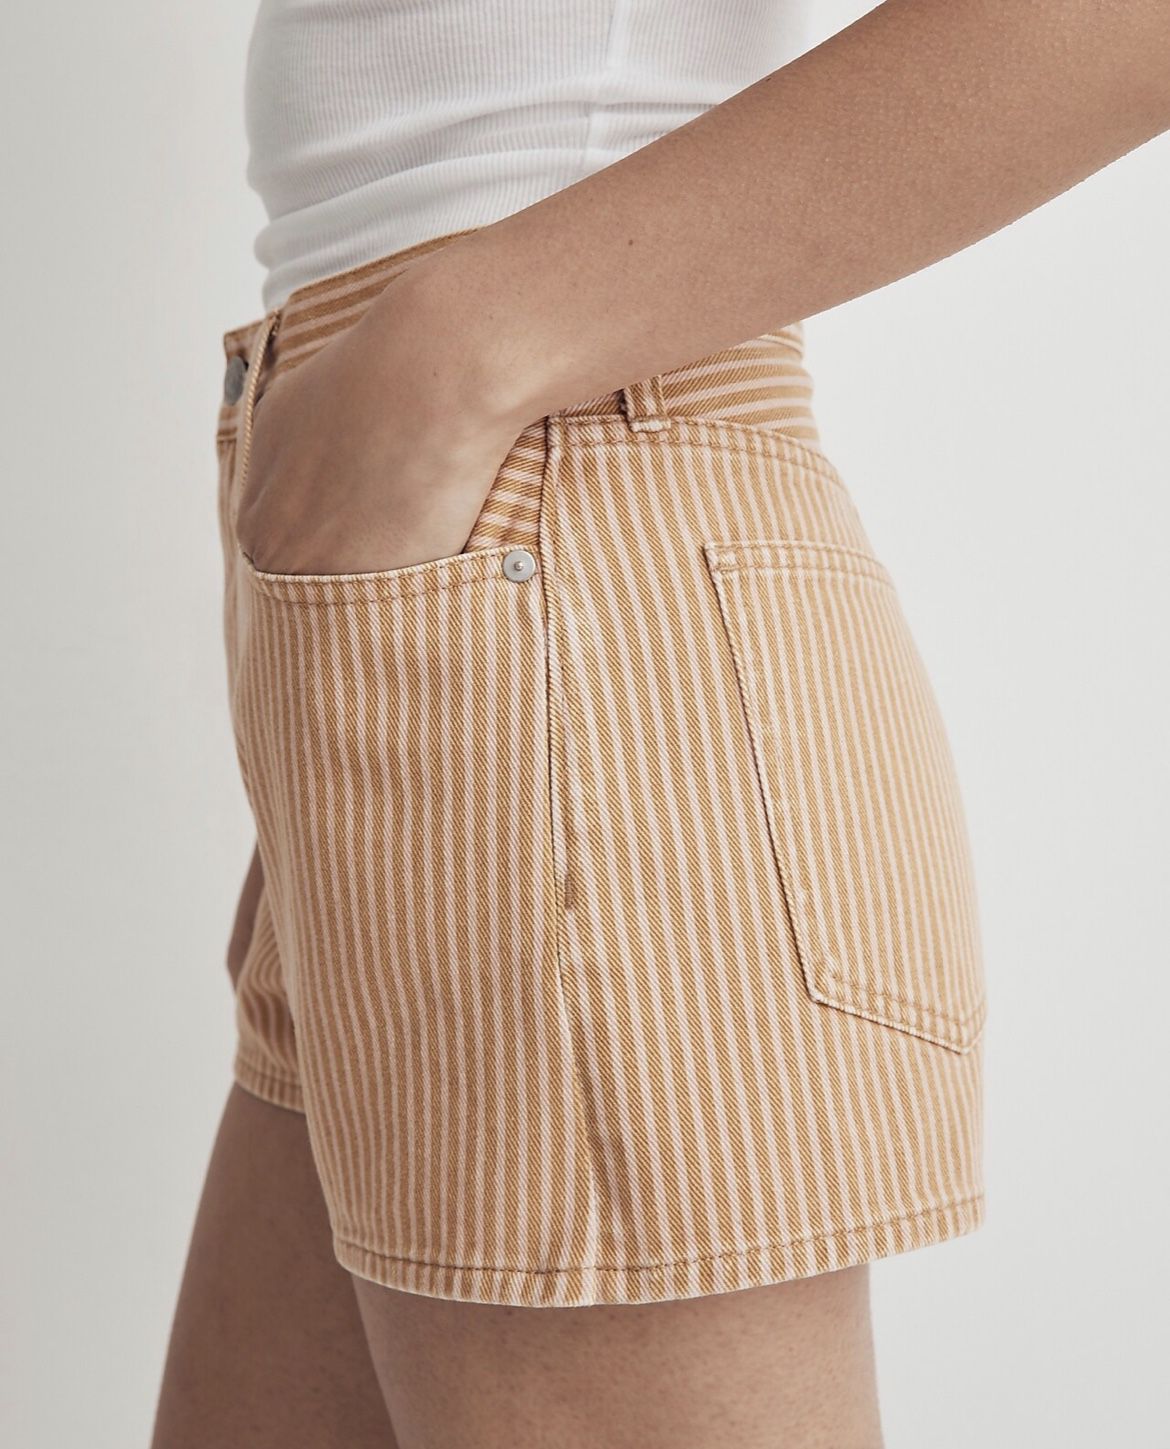 Madewell Women’s Momjean Shorts (Stripes) $32 NWT